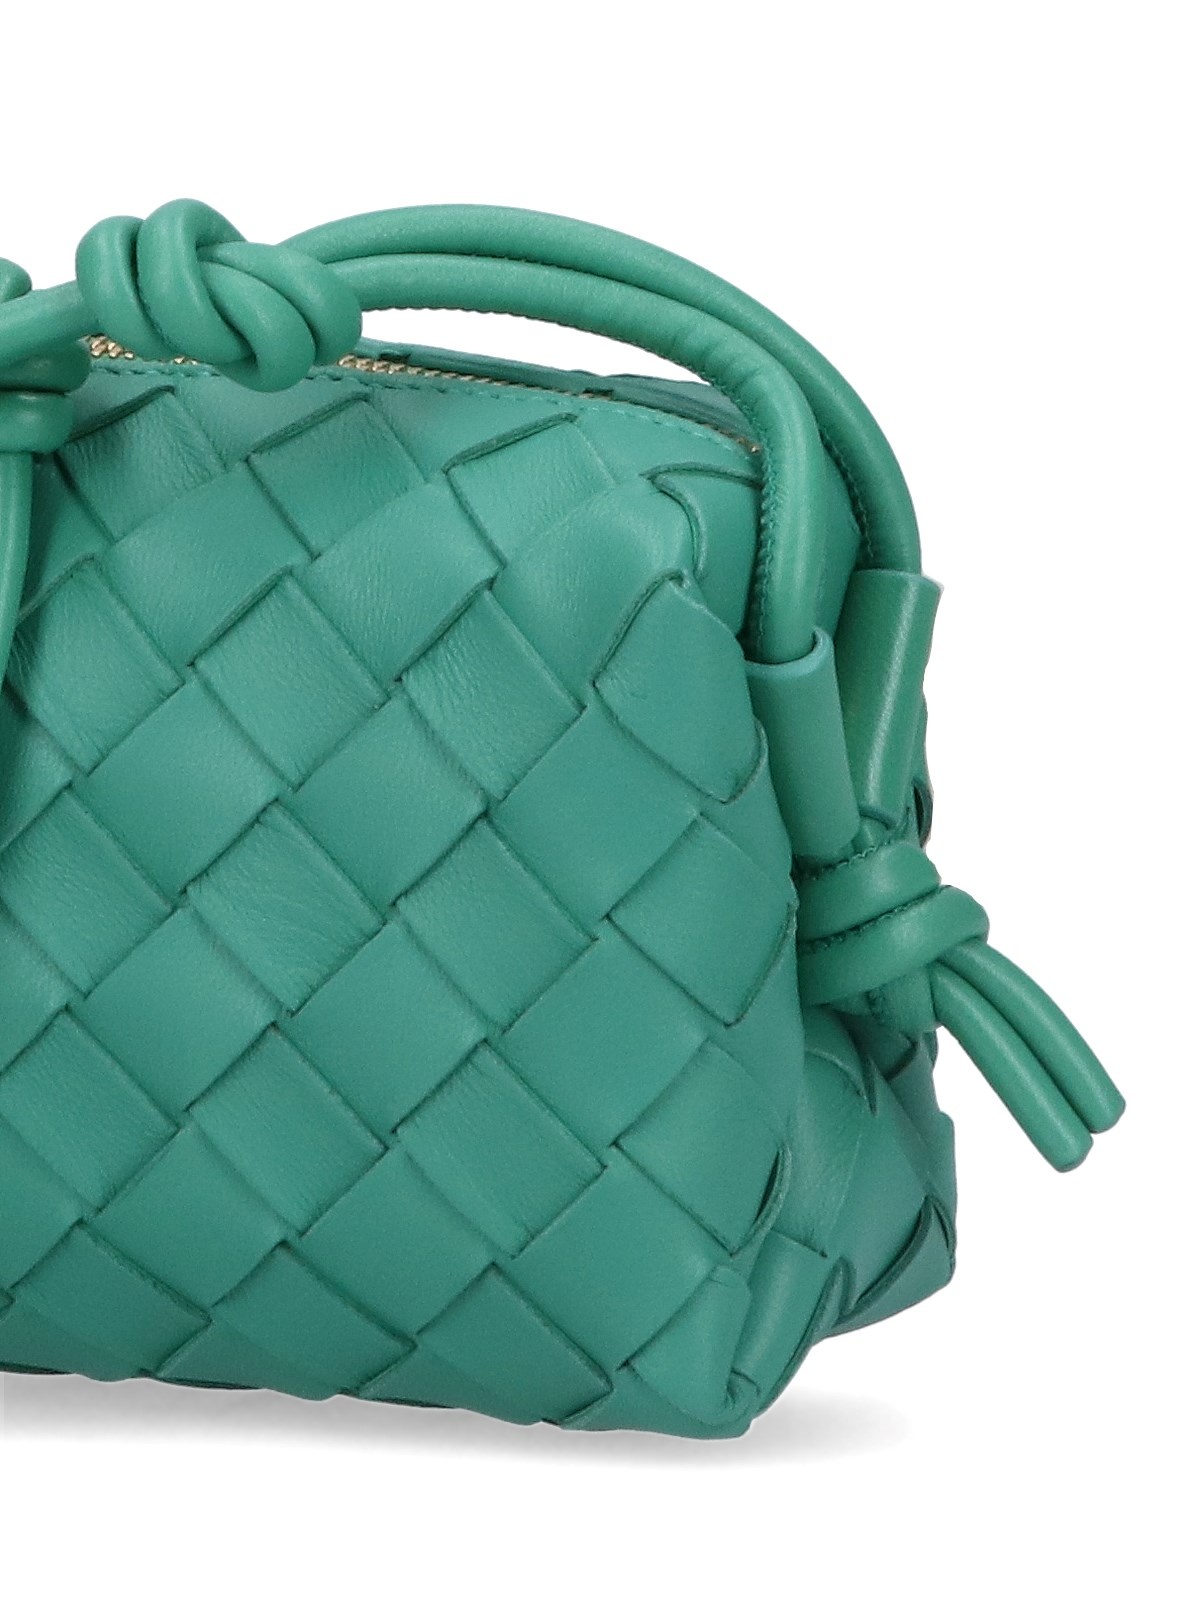 Candy Loop Leather Crossbody Bag in Green - Bottega Veneta